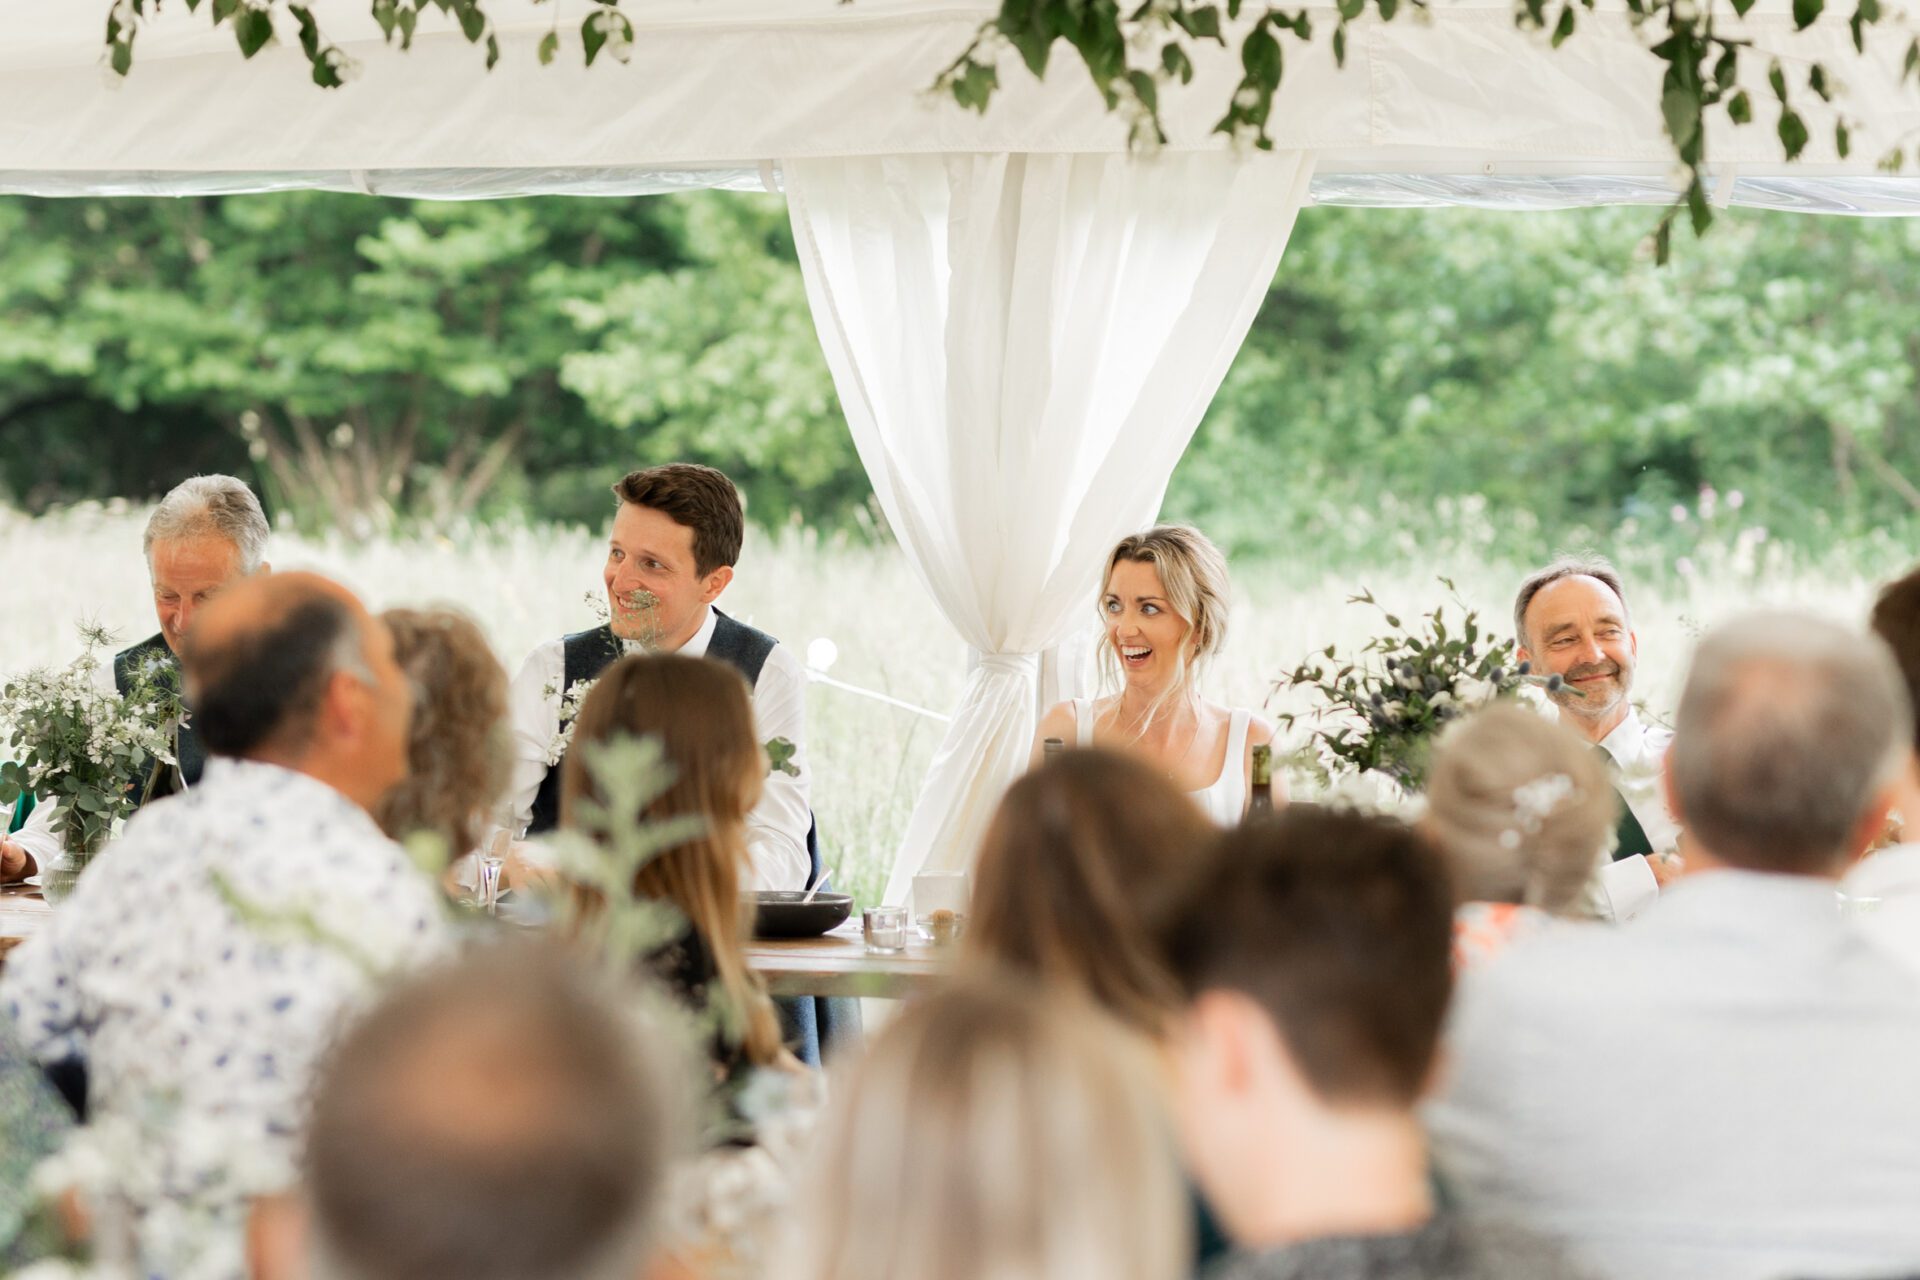 The bride and groom listen to speeches during their Devon marquee wedding